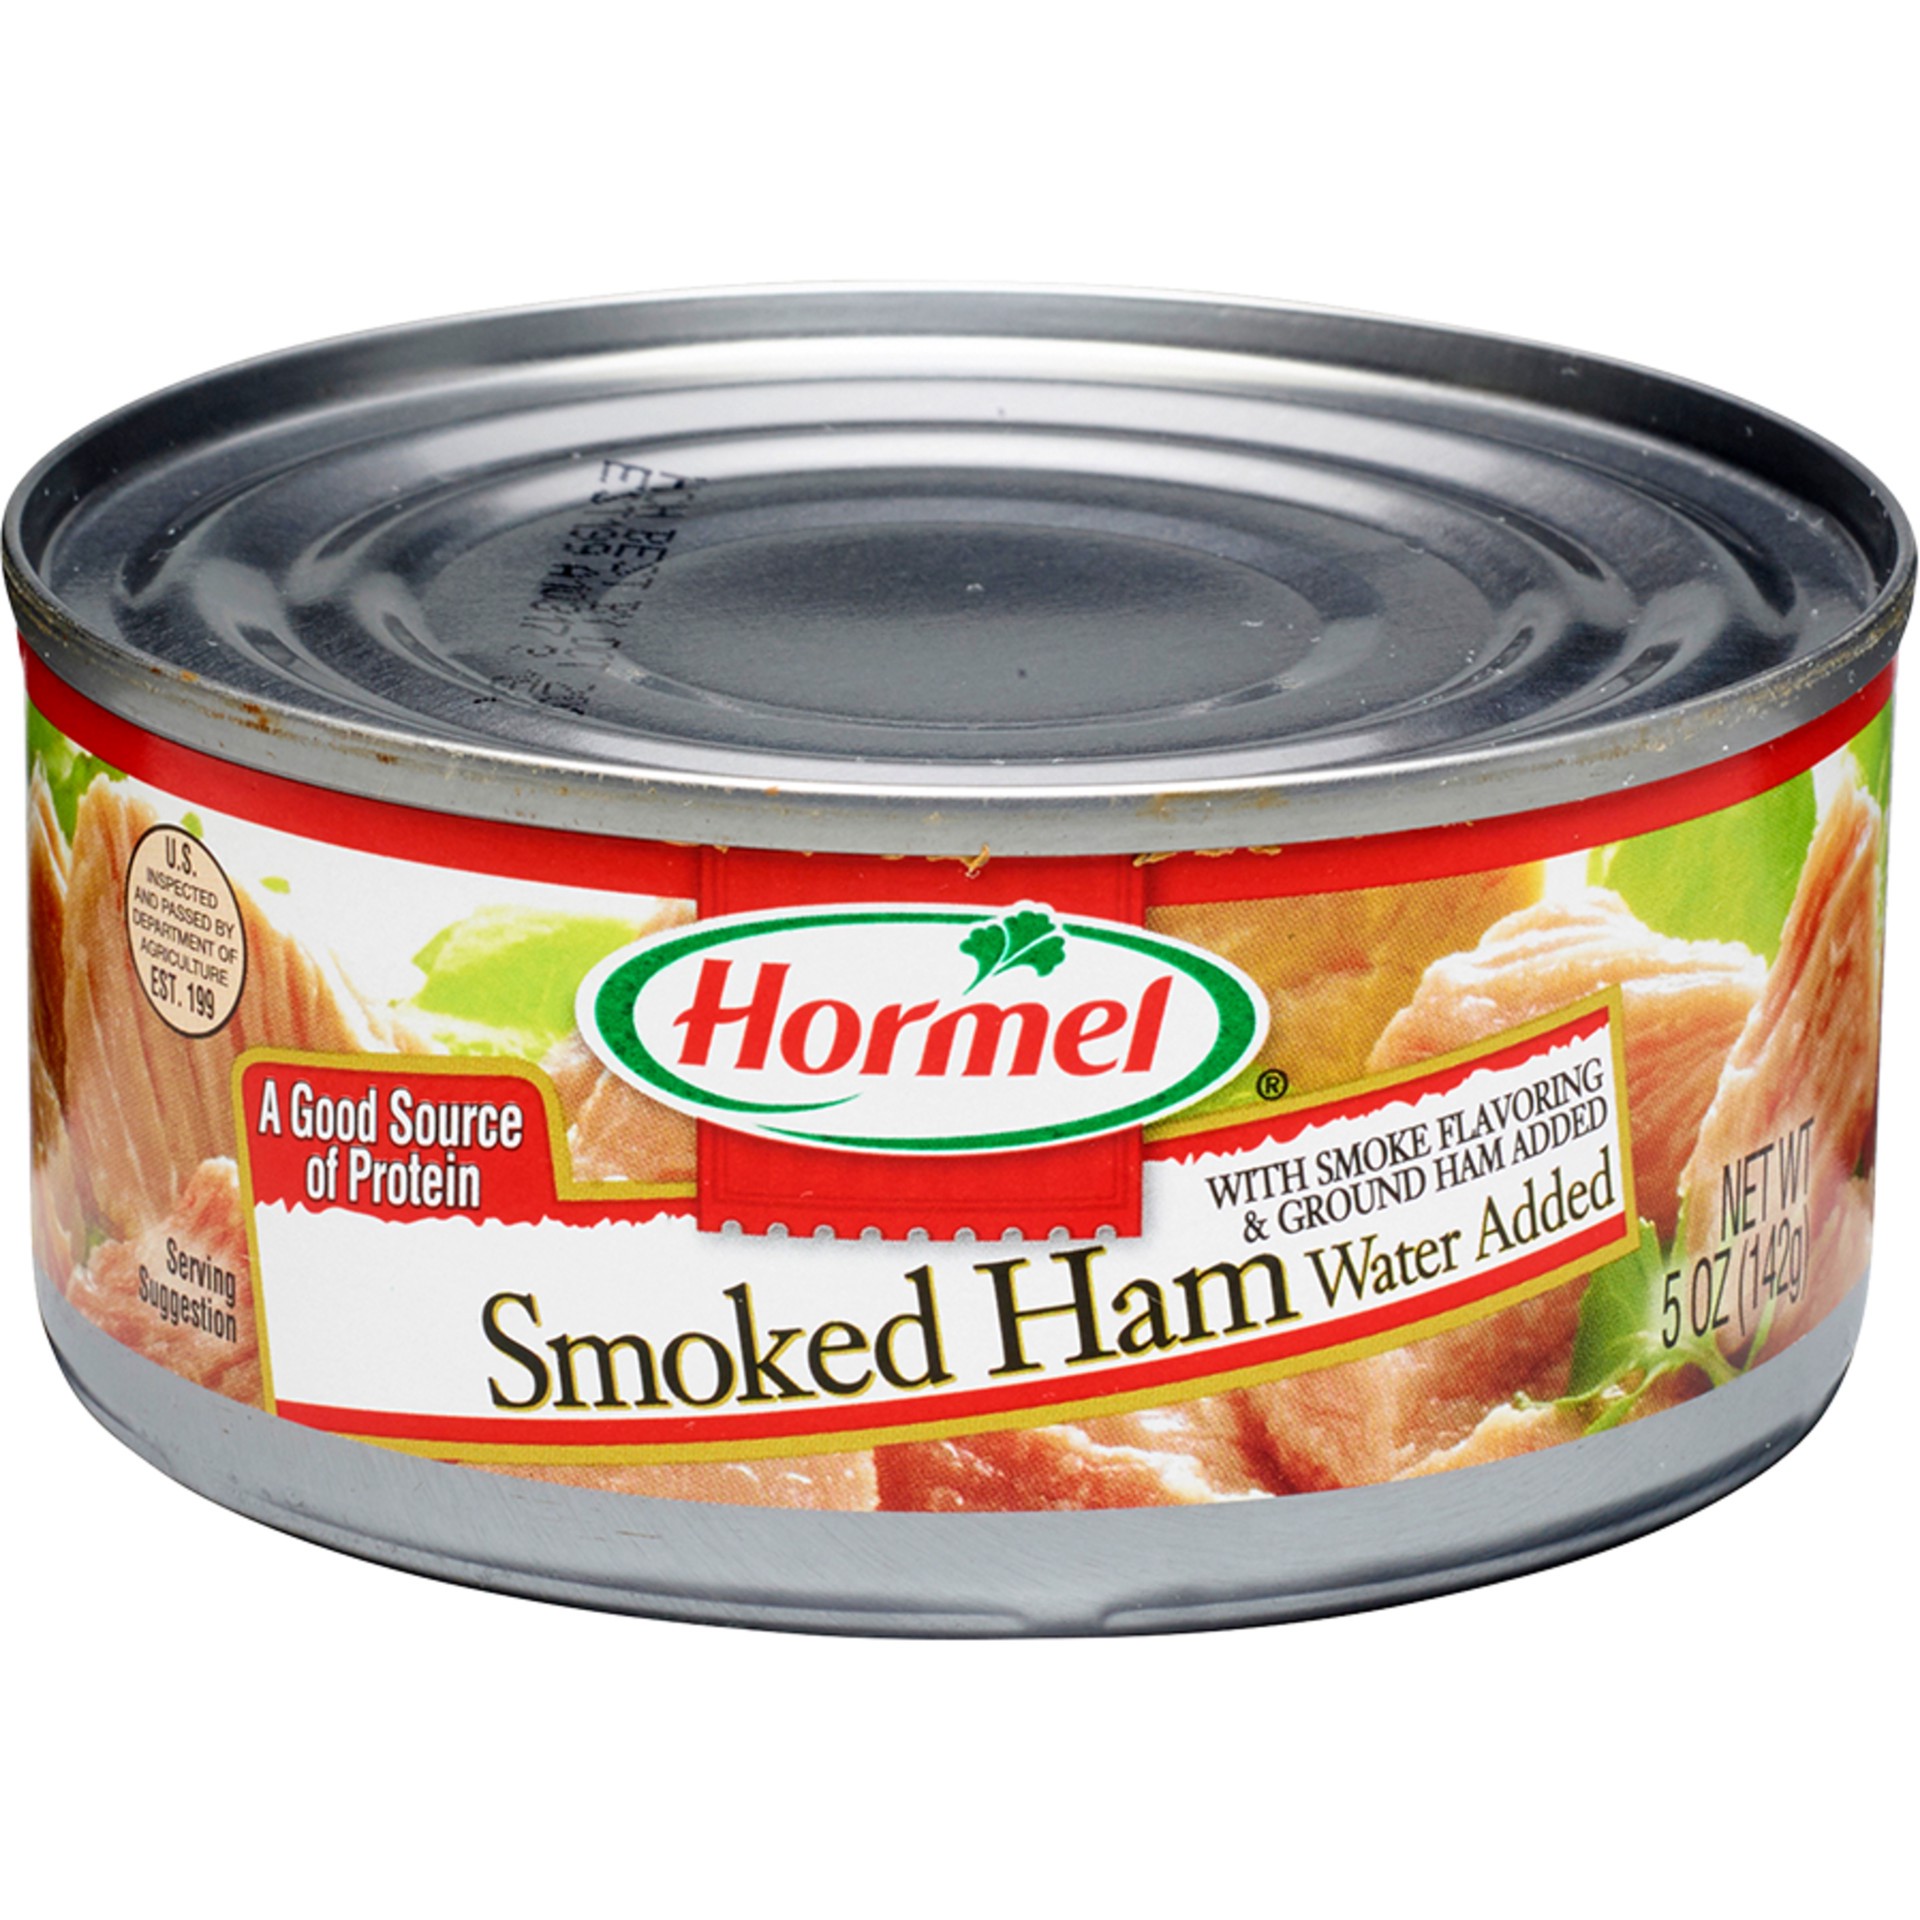 slide 1 of 4, Hormel Smoked Ham with Smoke Flavoring & Ground Ham Added, 5 oz